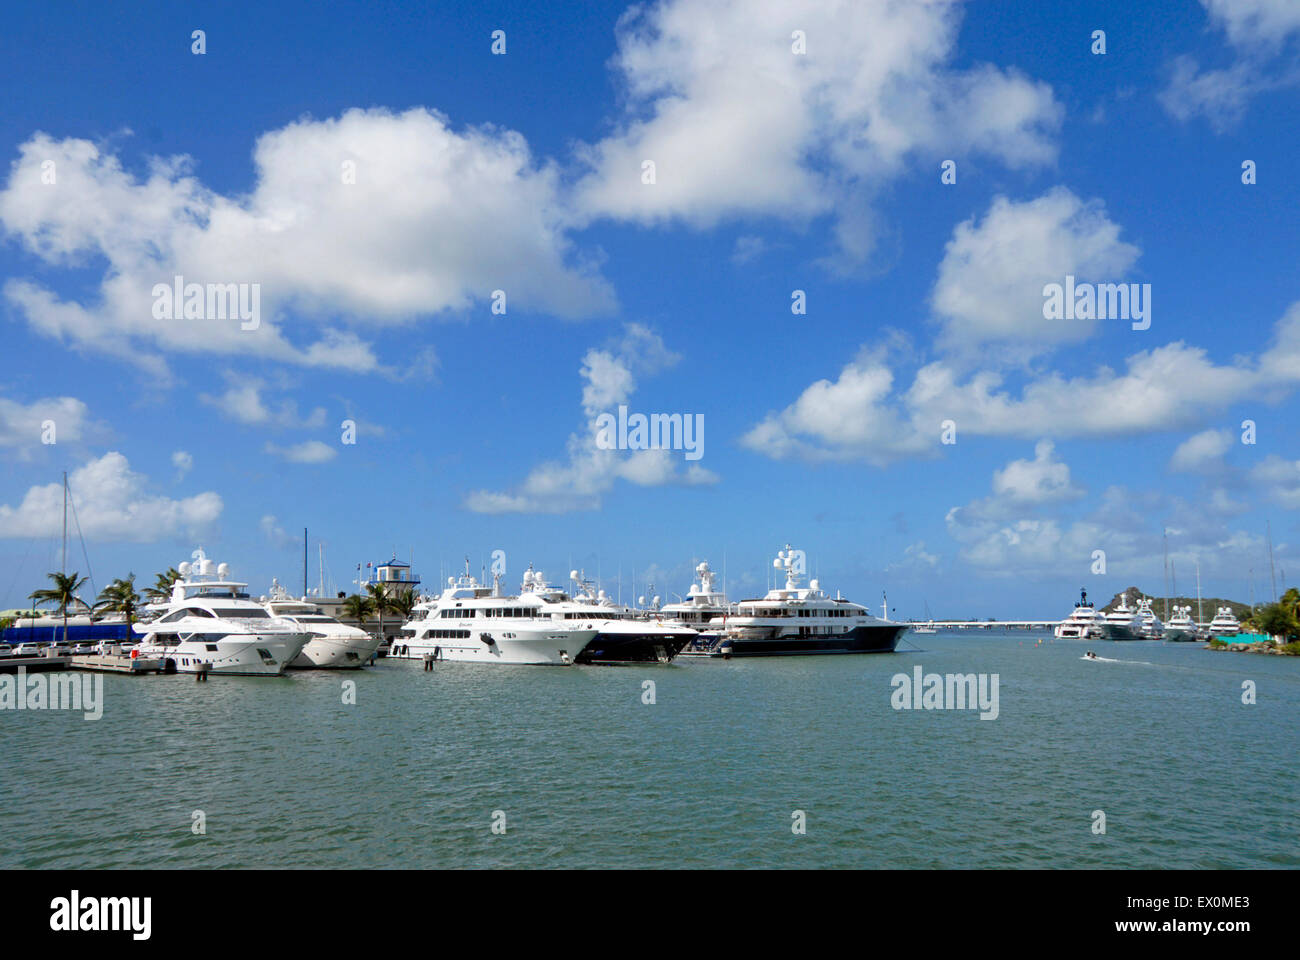 Several prestige boats moored, St Maarten, Caribbean Stock Photo